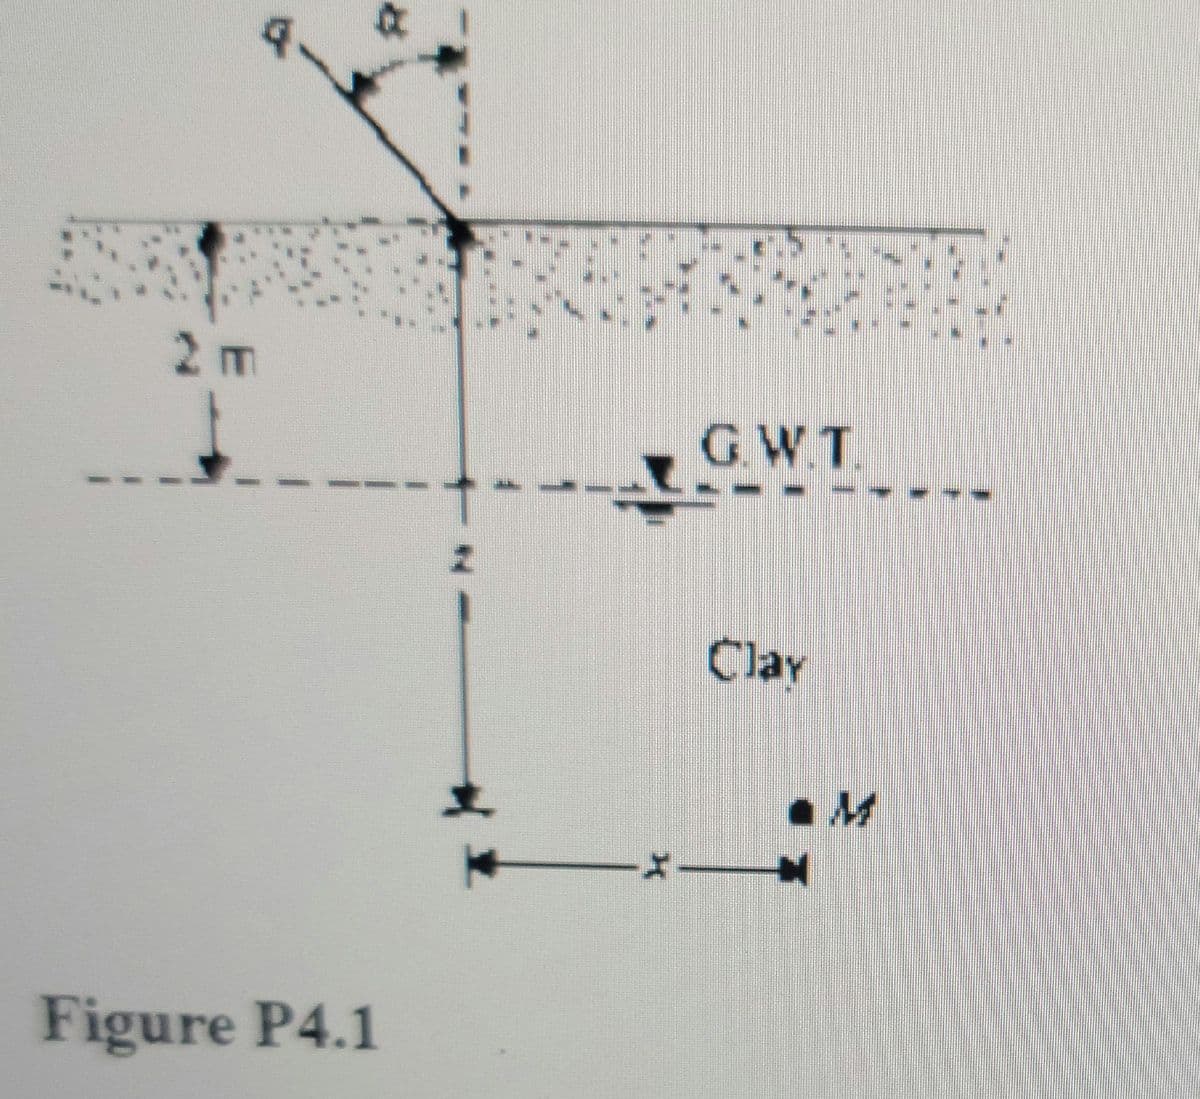 9.
8
Figure P4.1
N
Ž
EDE
6
G.W.T.
Clay
X ——
7
11